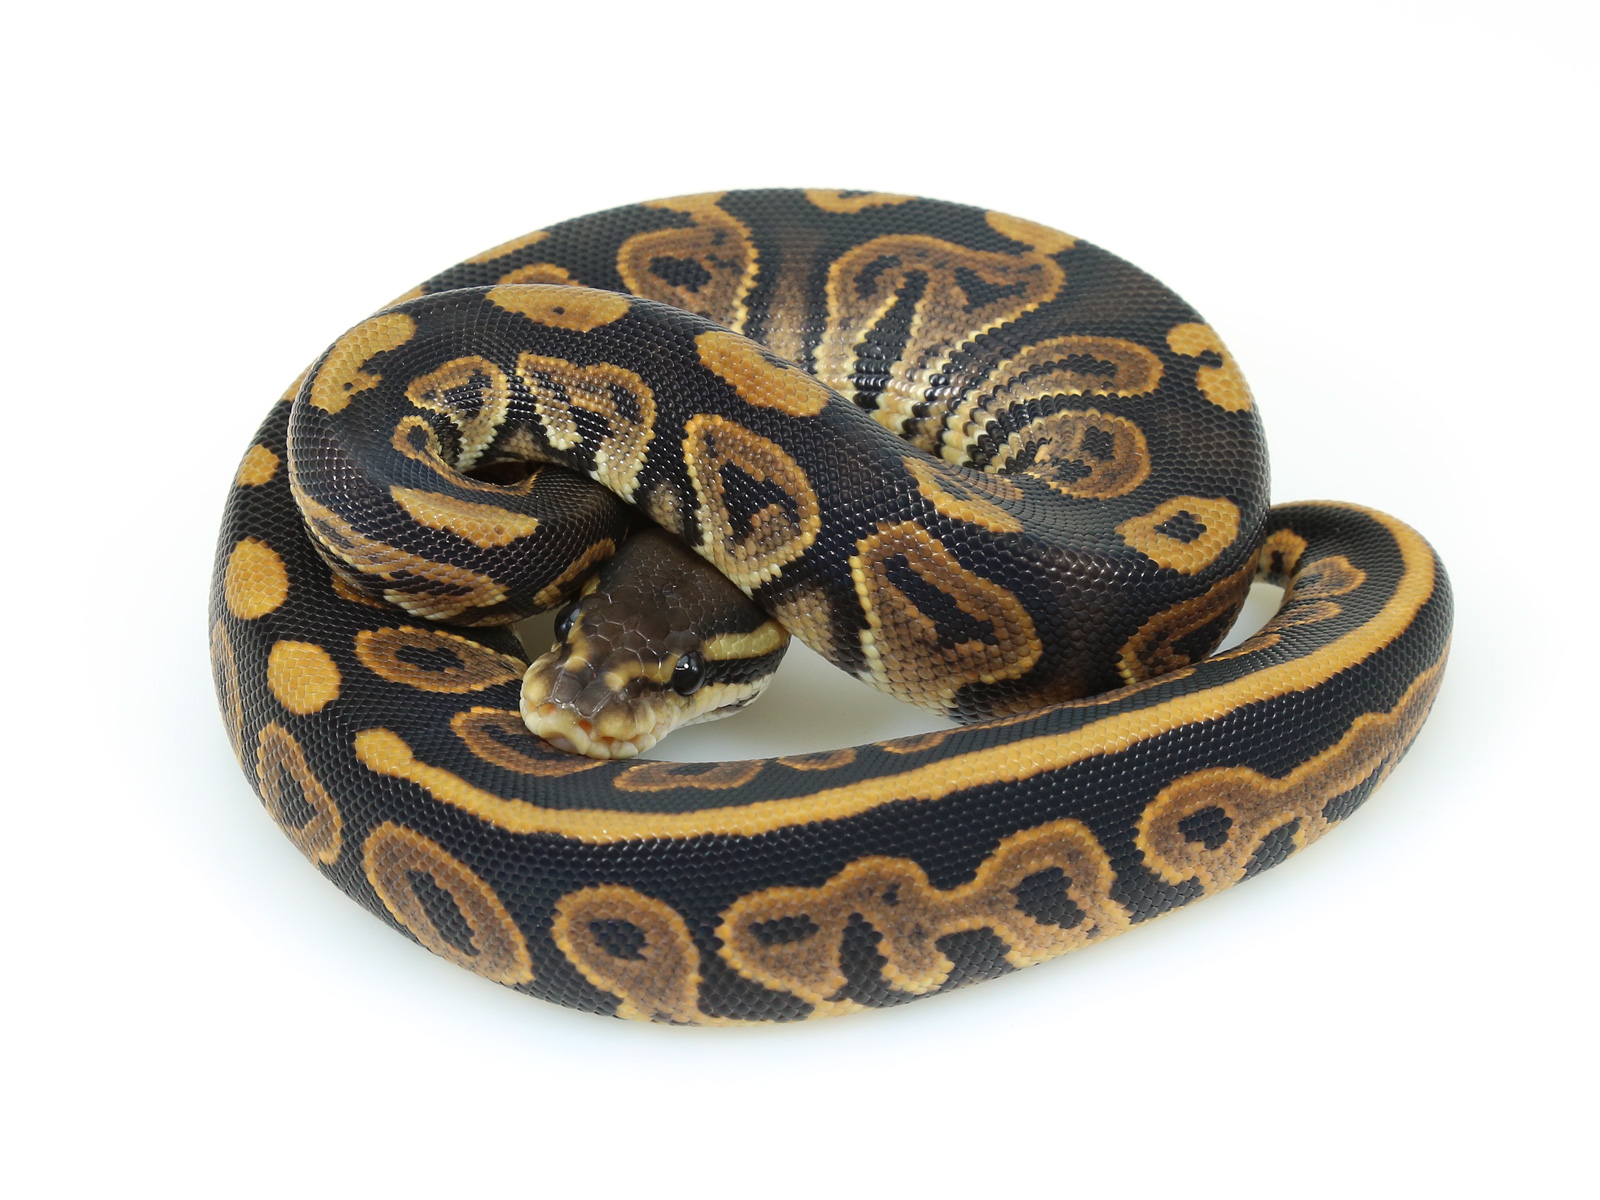 ball python, black pastel